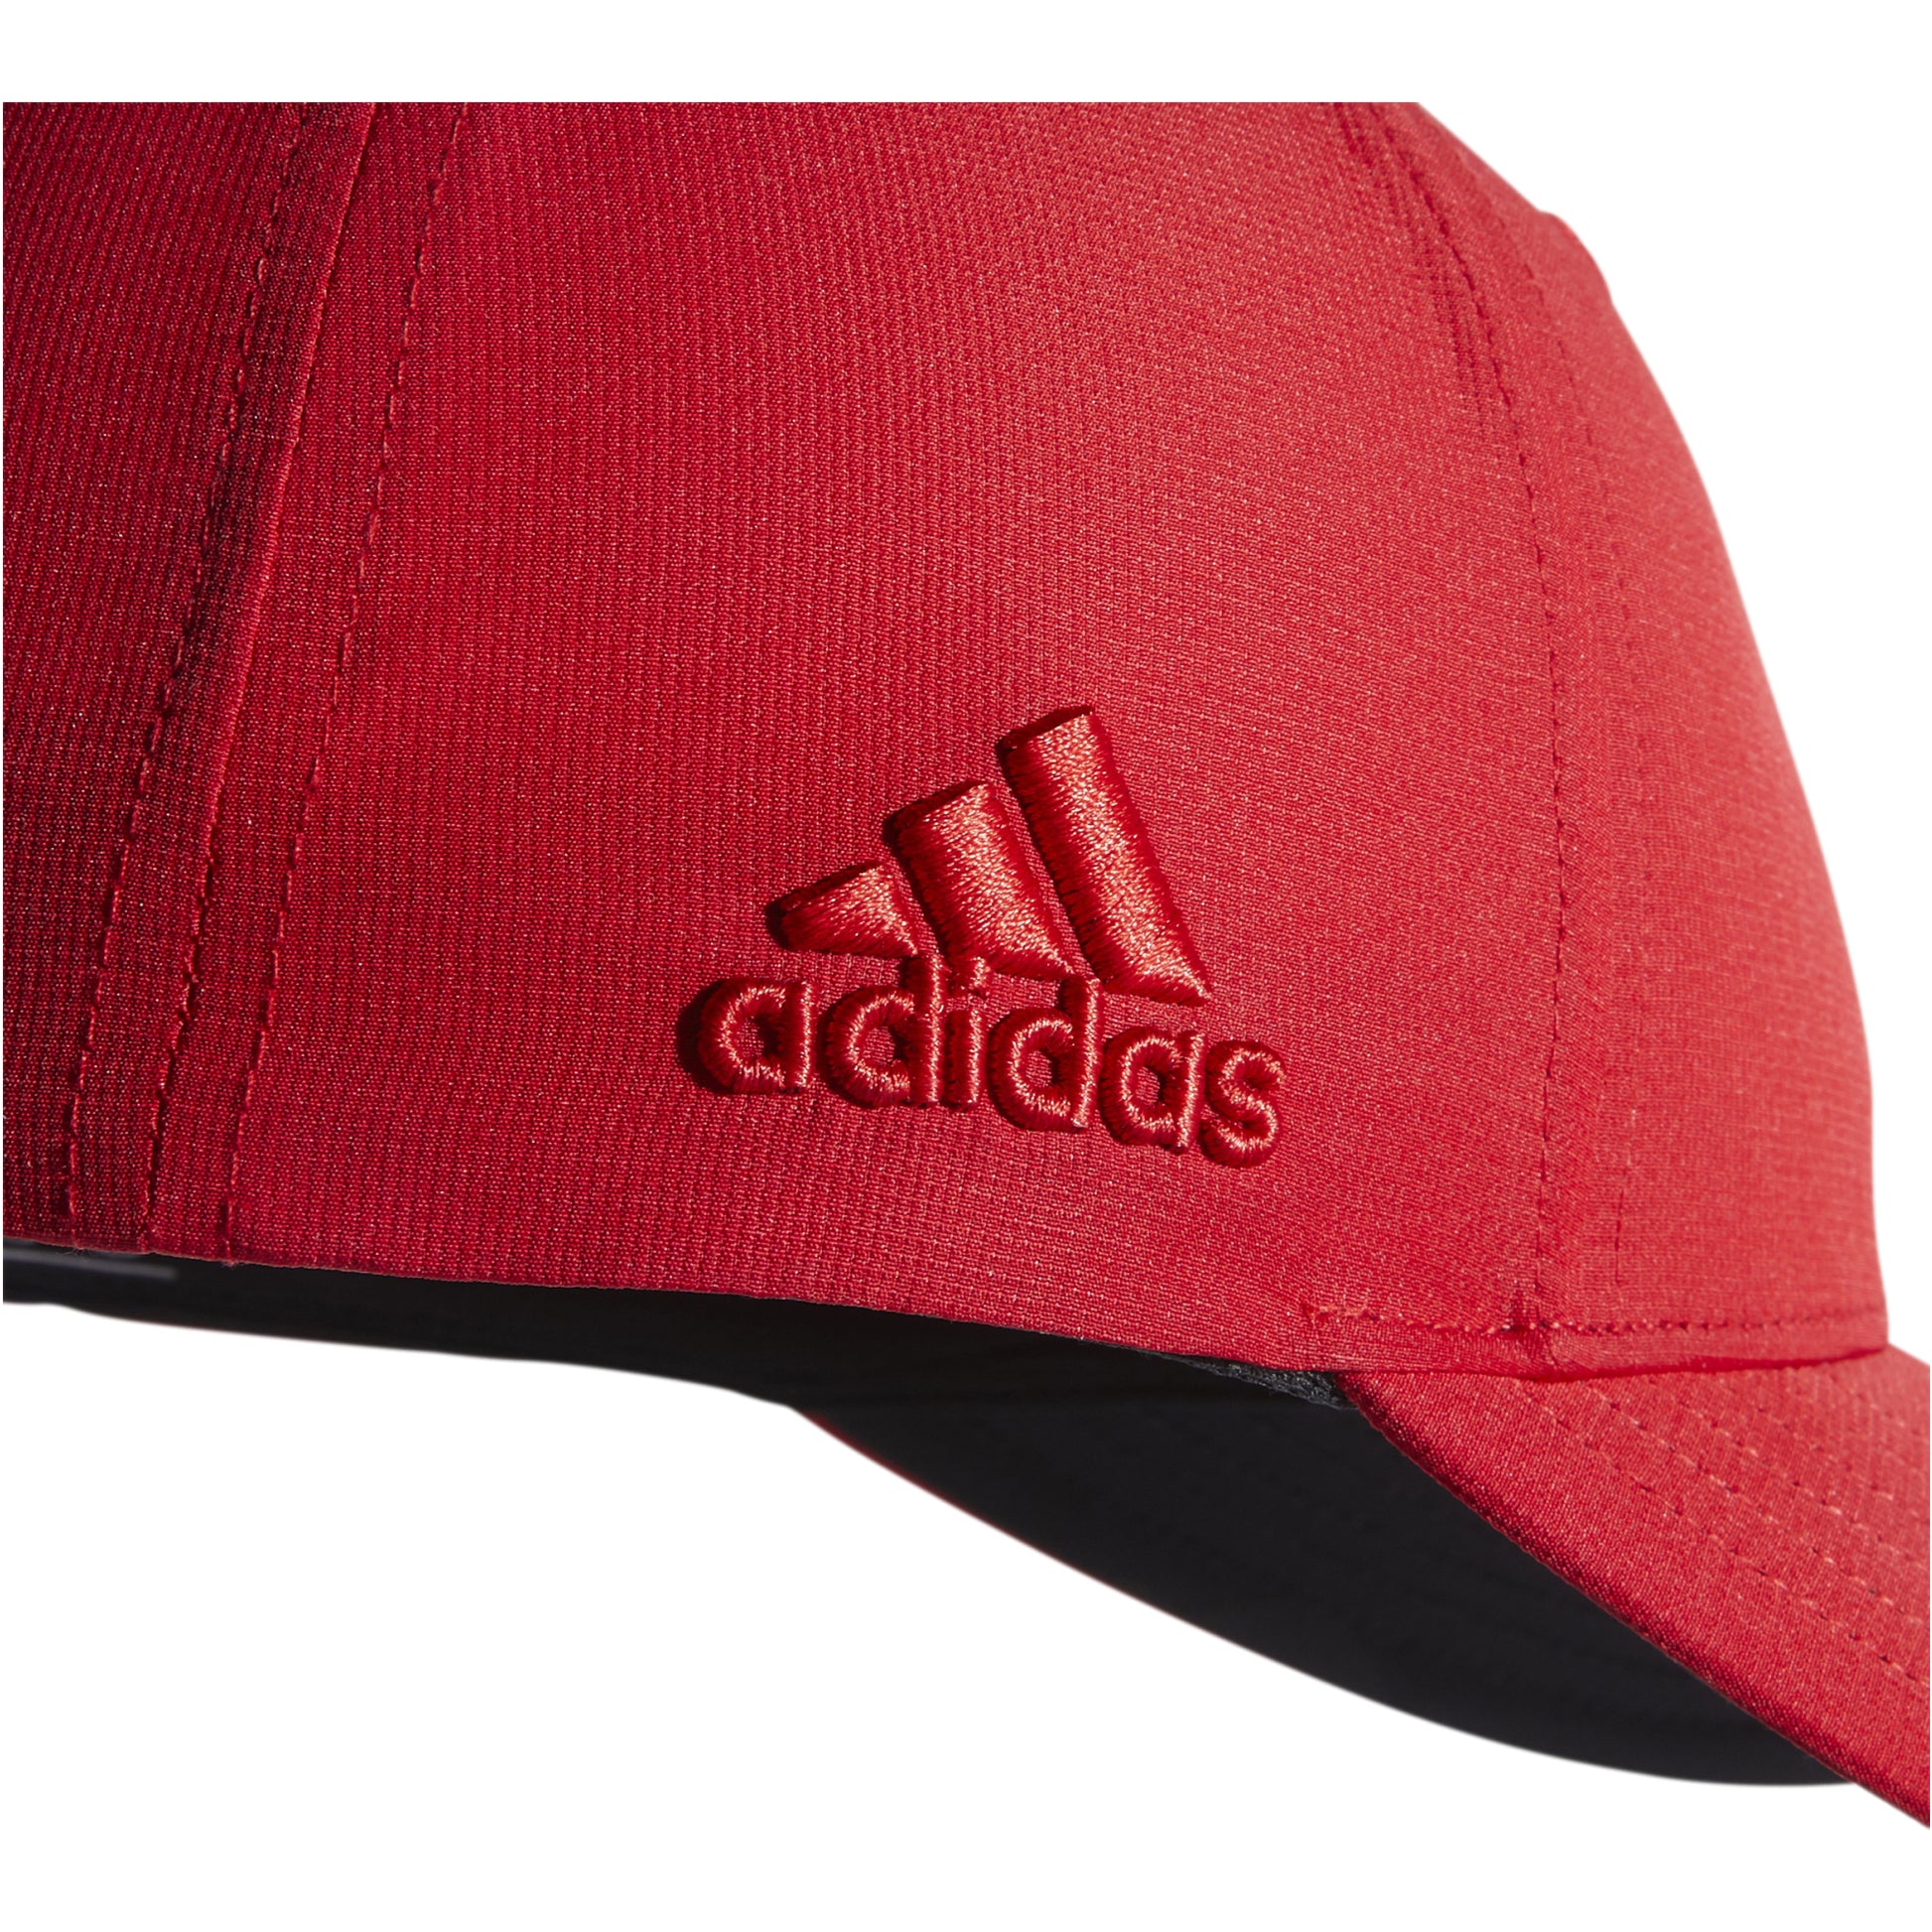 Adidas Hat Red White Flex Fit L/XL Outdoor Hunt Fish Golf Skate Baseball Cap